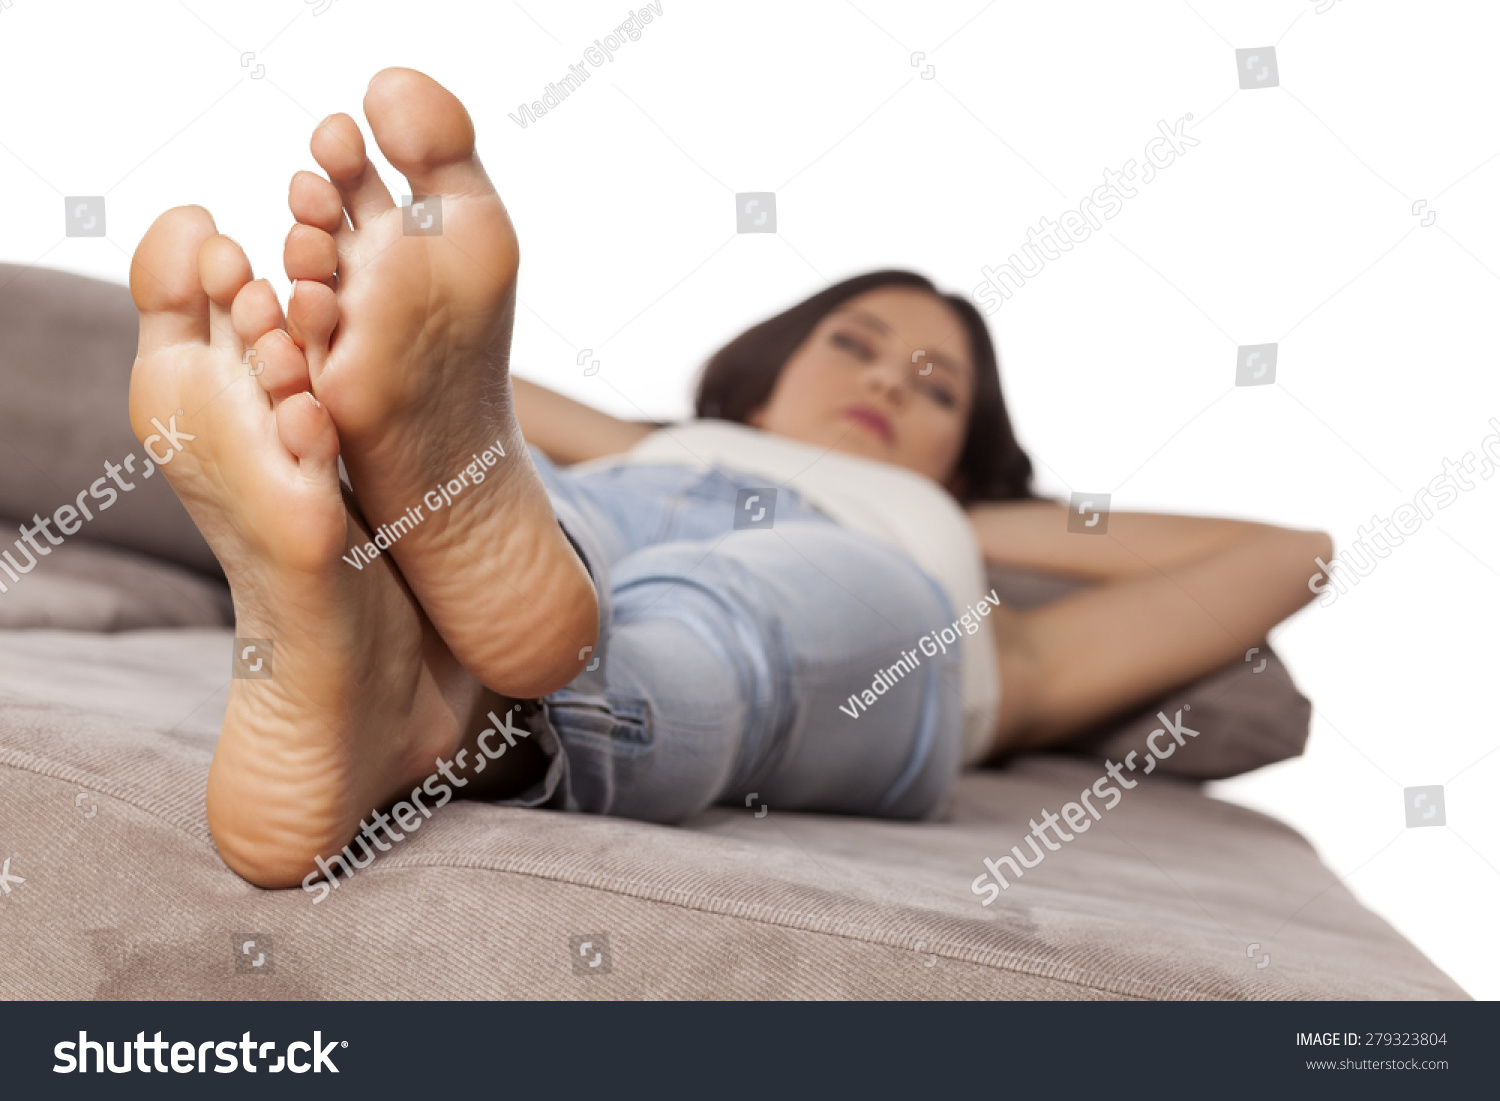 Nude Feet